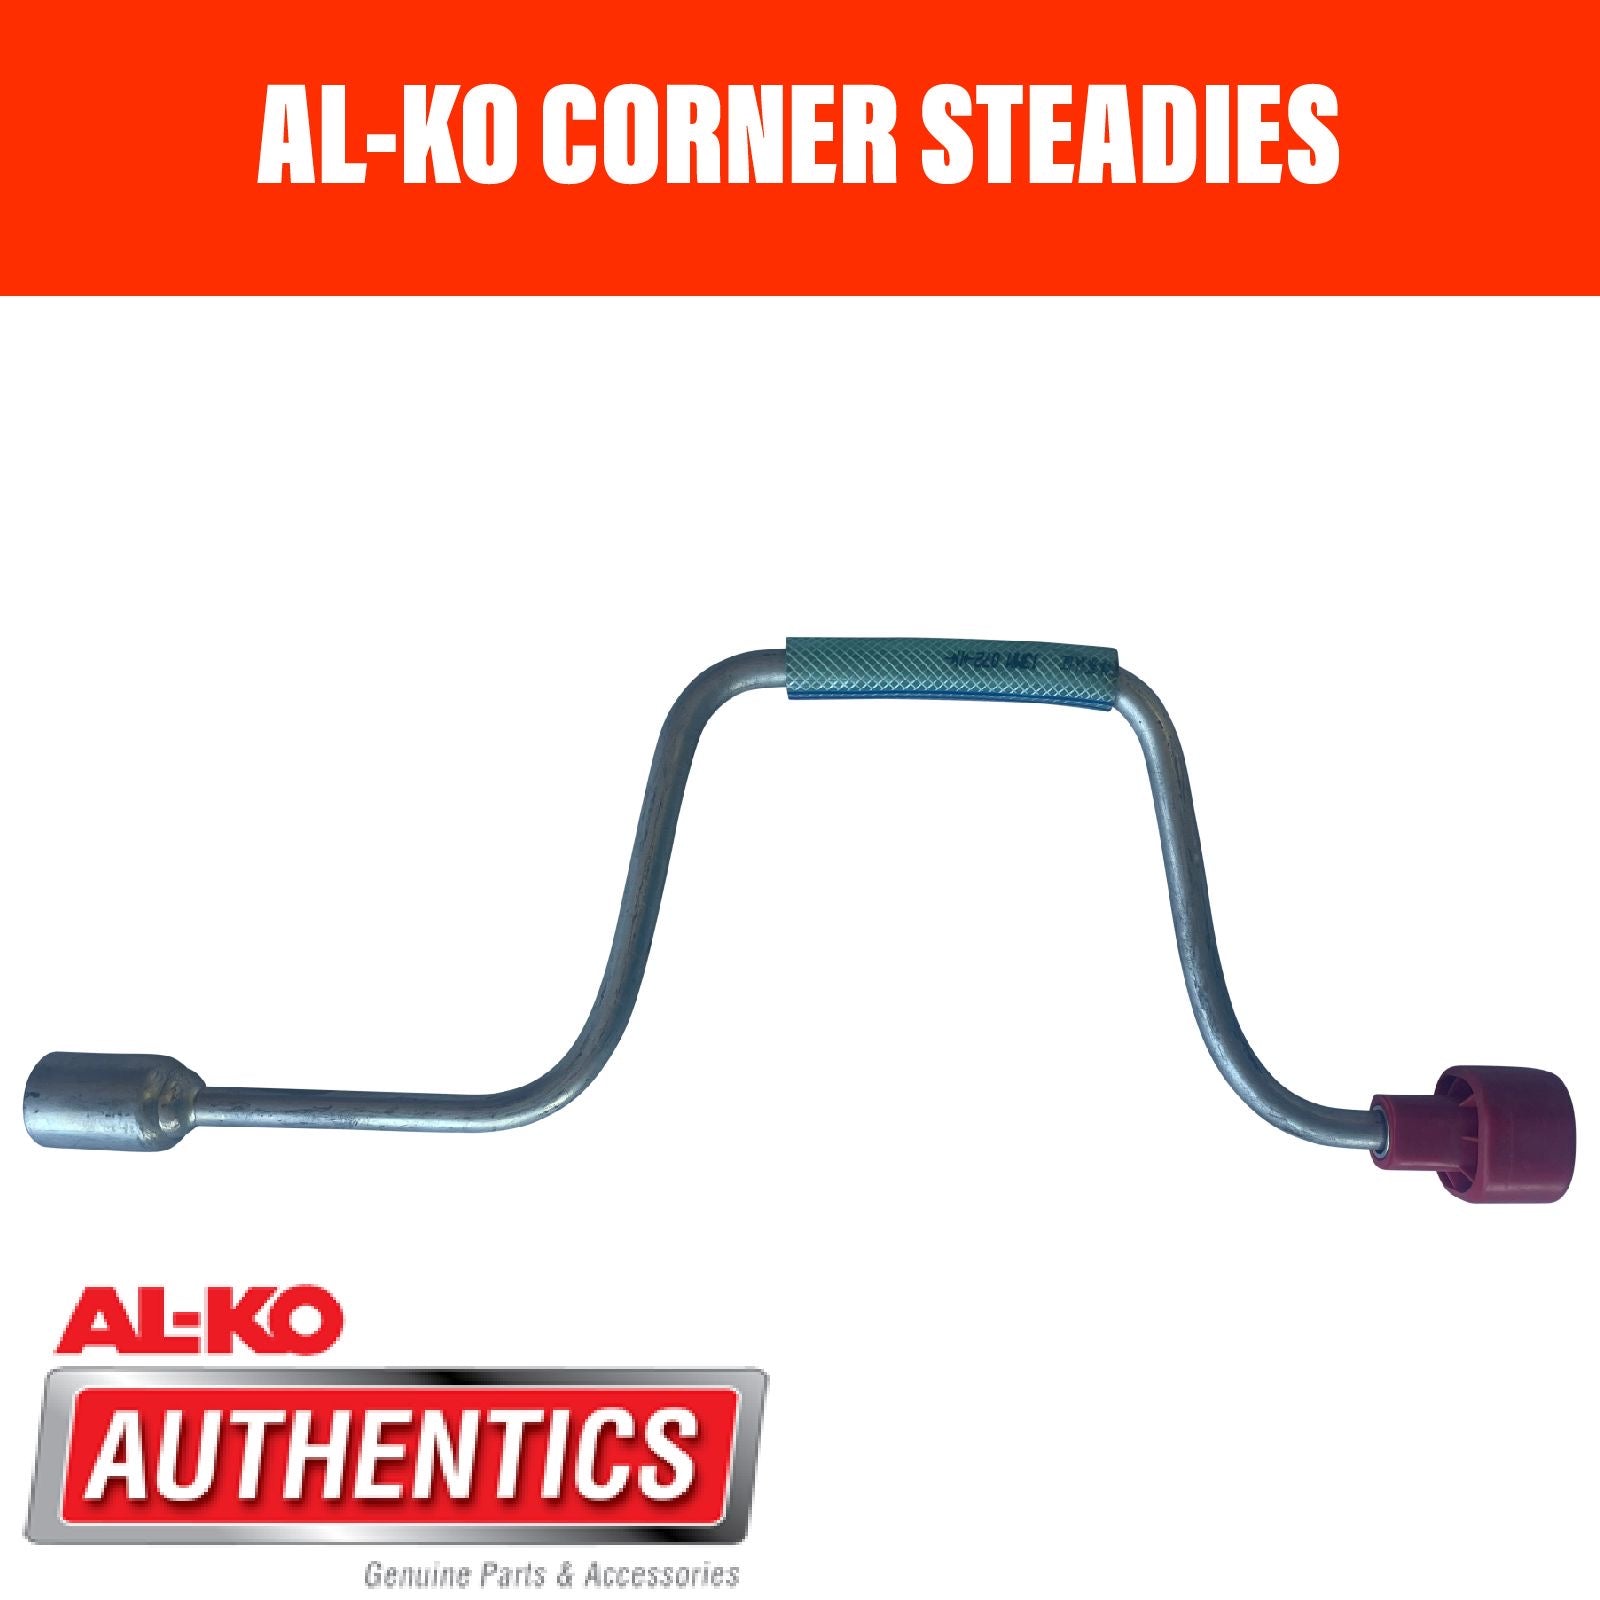 AL-KO Corner Steady Hex Drive Handle 450mm Long